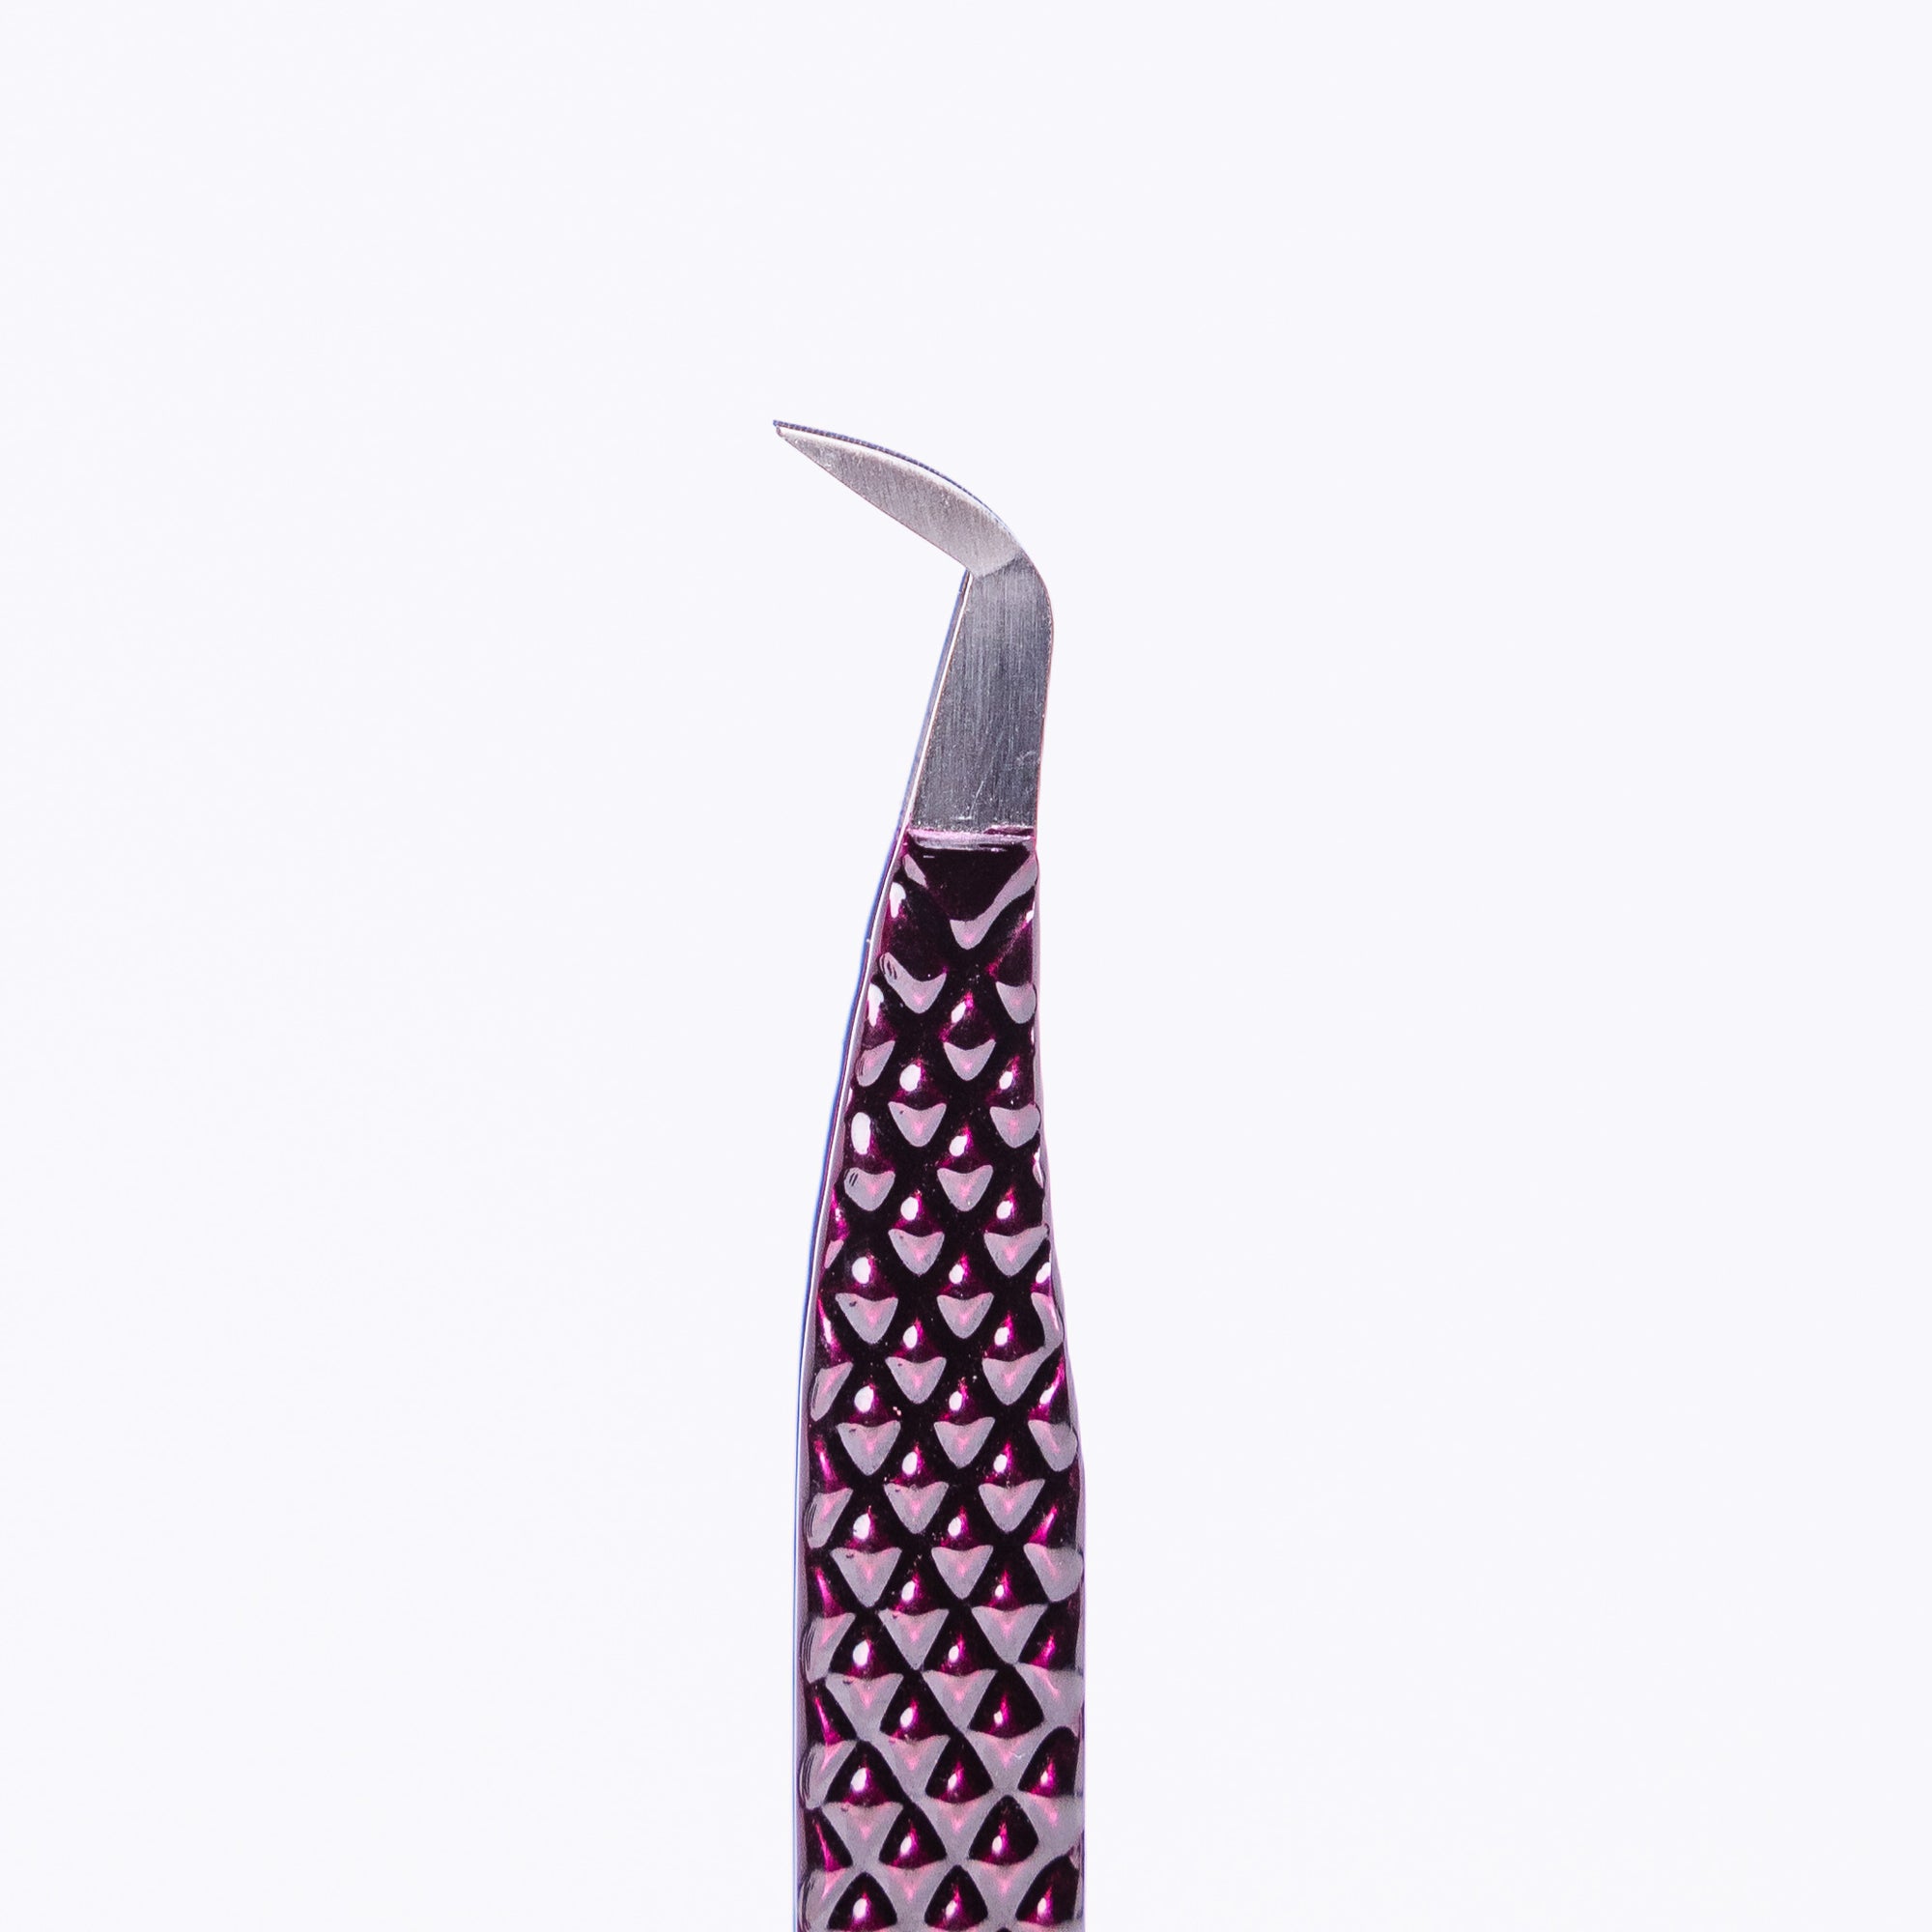 Nano Grip Eyelash Extension Tweezers | Floral Collection